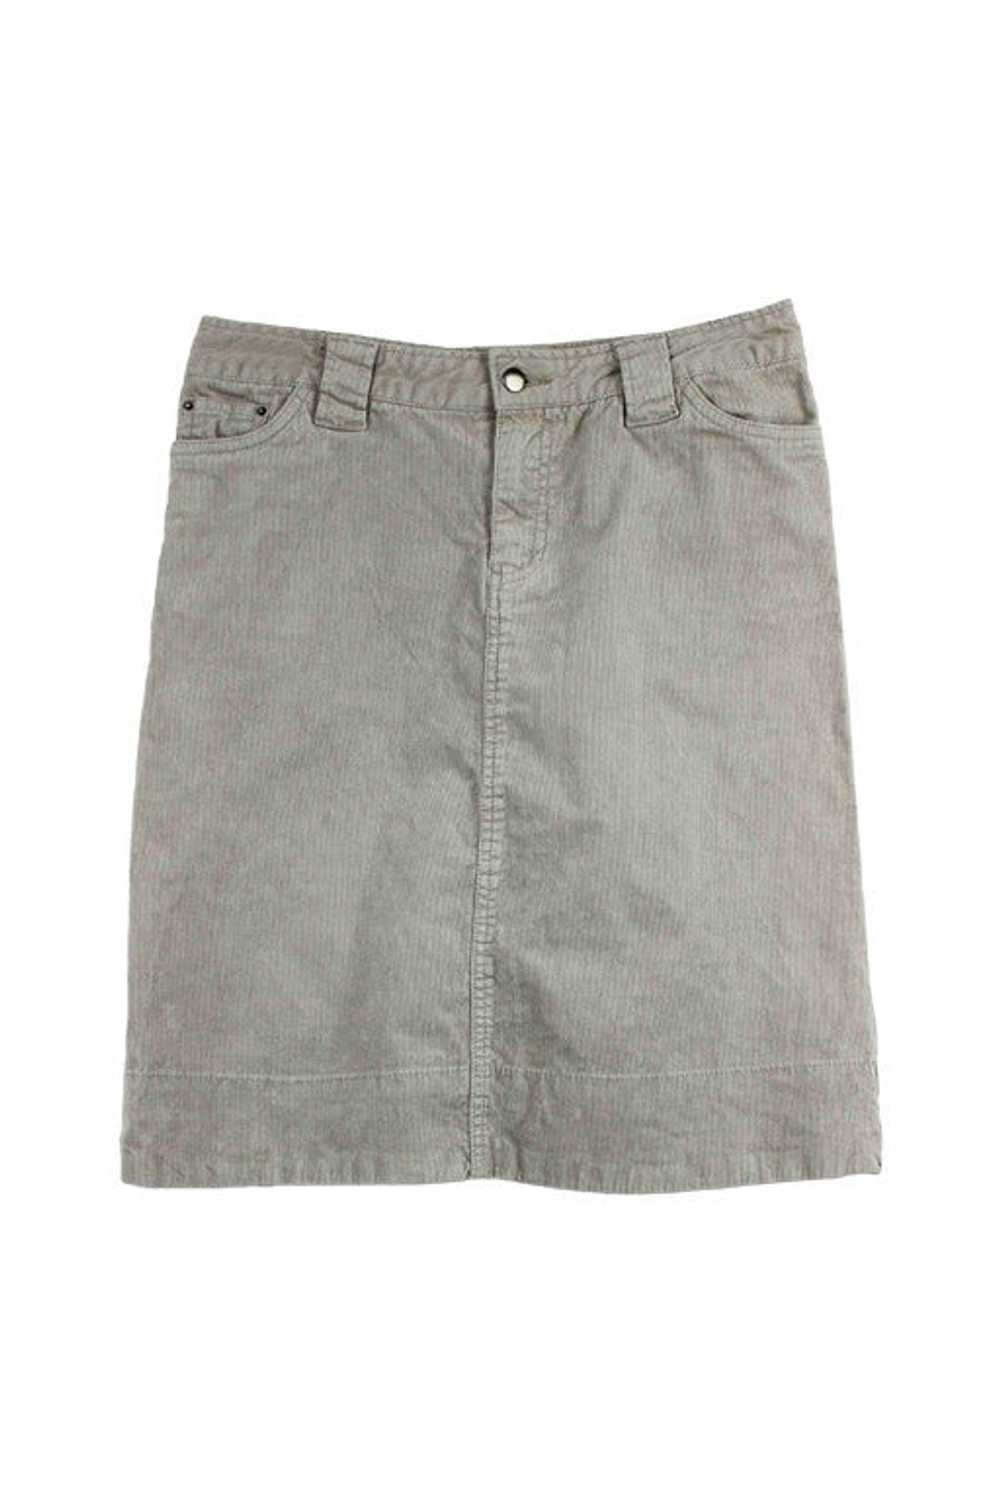 Cotton skirt - Beige 90s corduroy skirt Made of c… - image 1